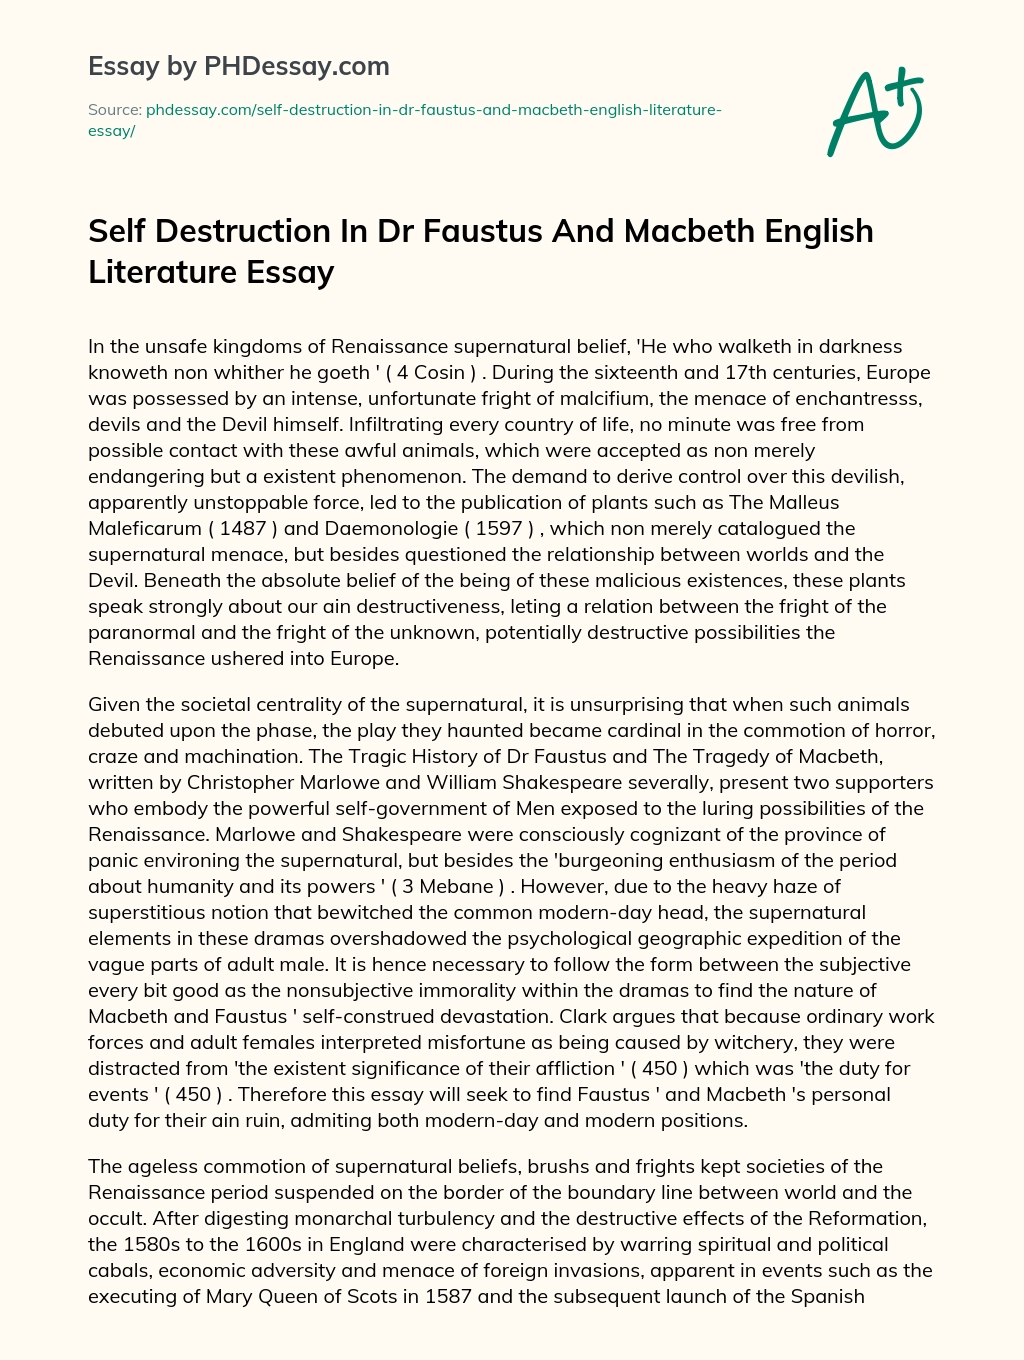 Self Destruction In Dr Faustus And Macbeth English Literature Essay essay